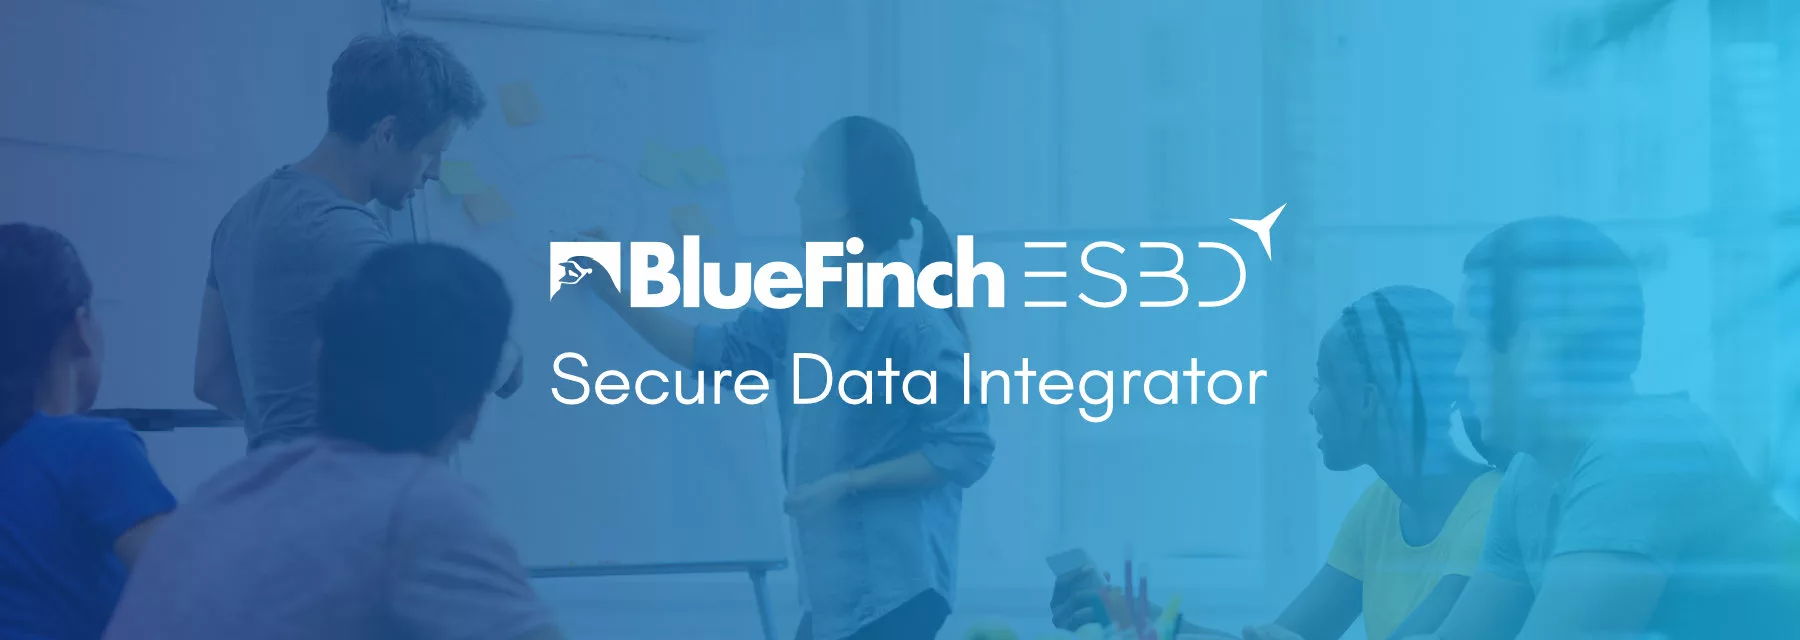 BlueFinch-ESBD - managed file transfer,mft